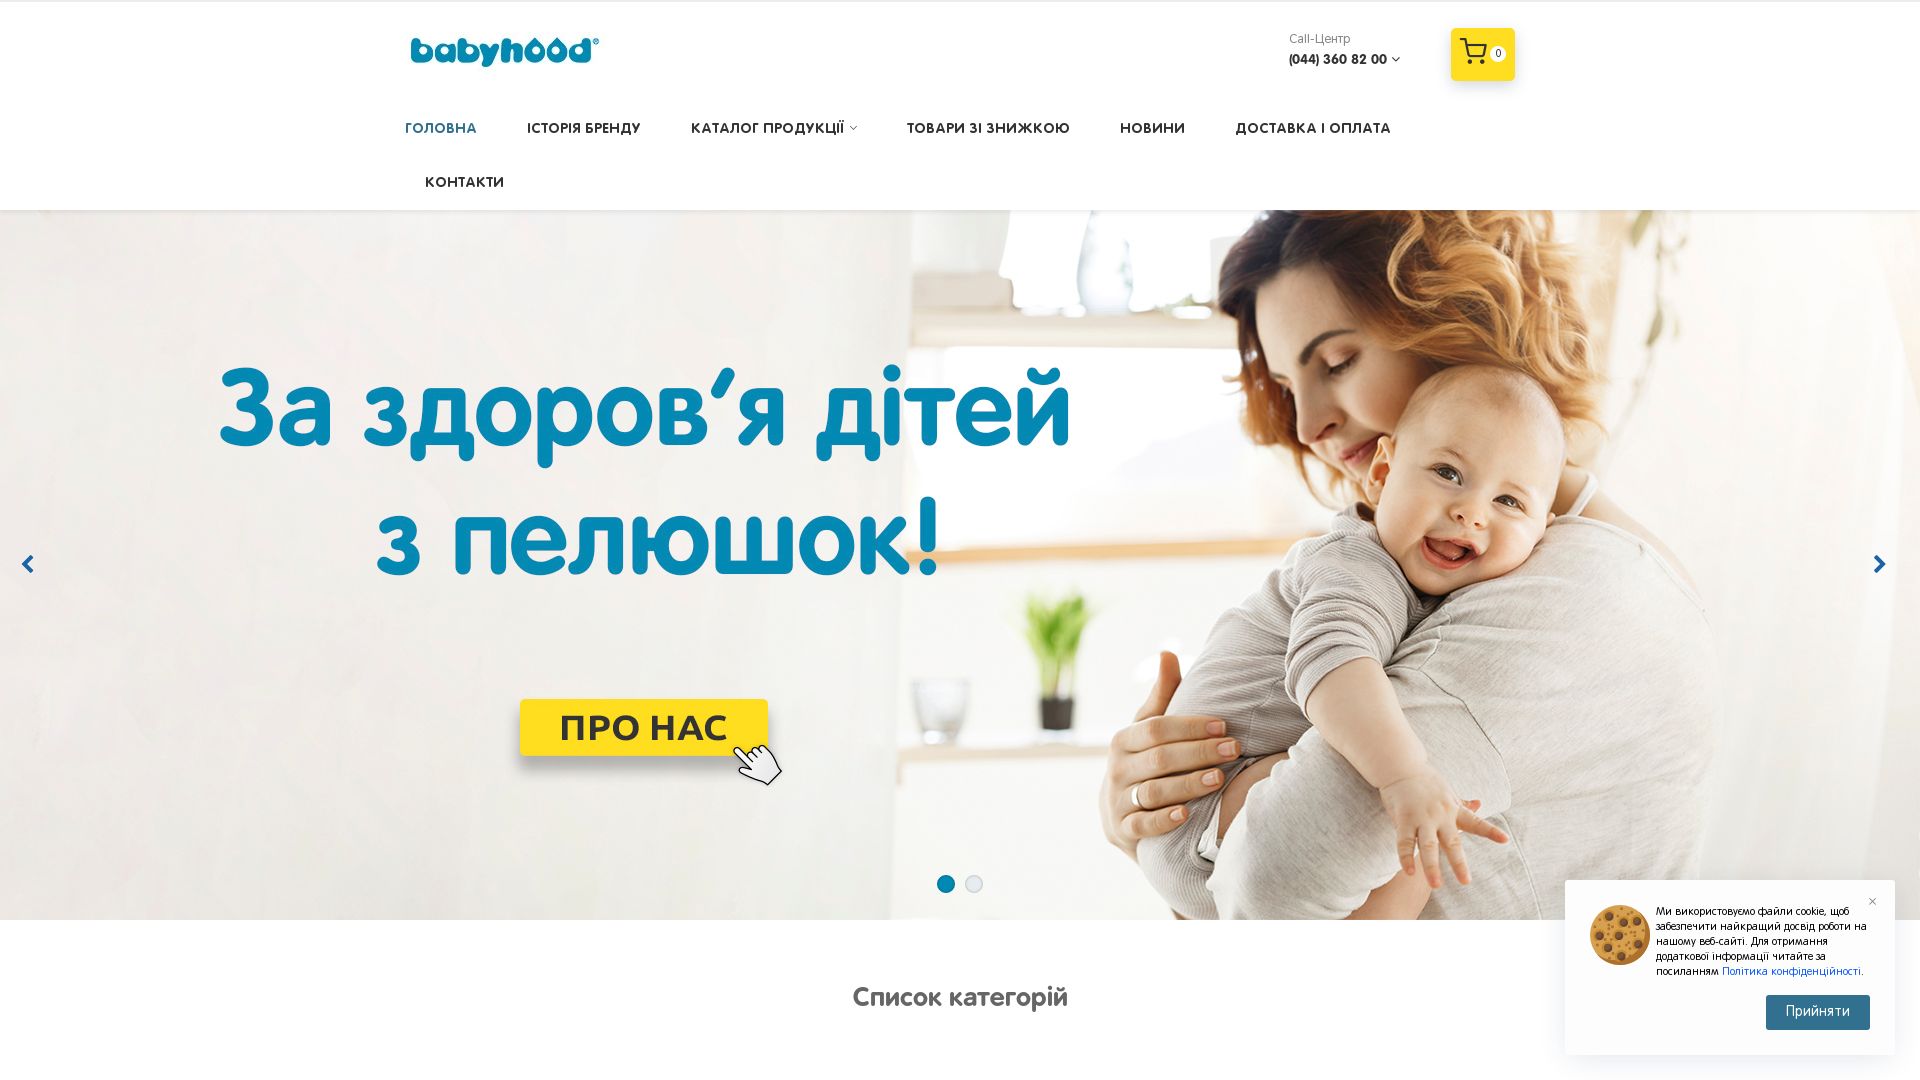 Estado web babyhood.ua está   ONLINE